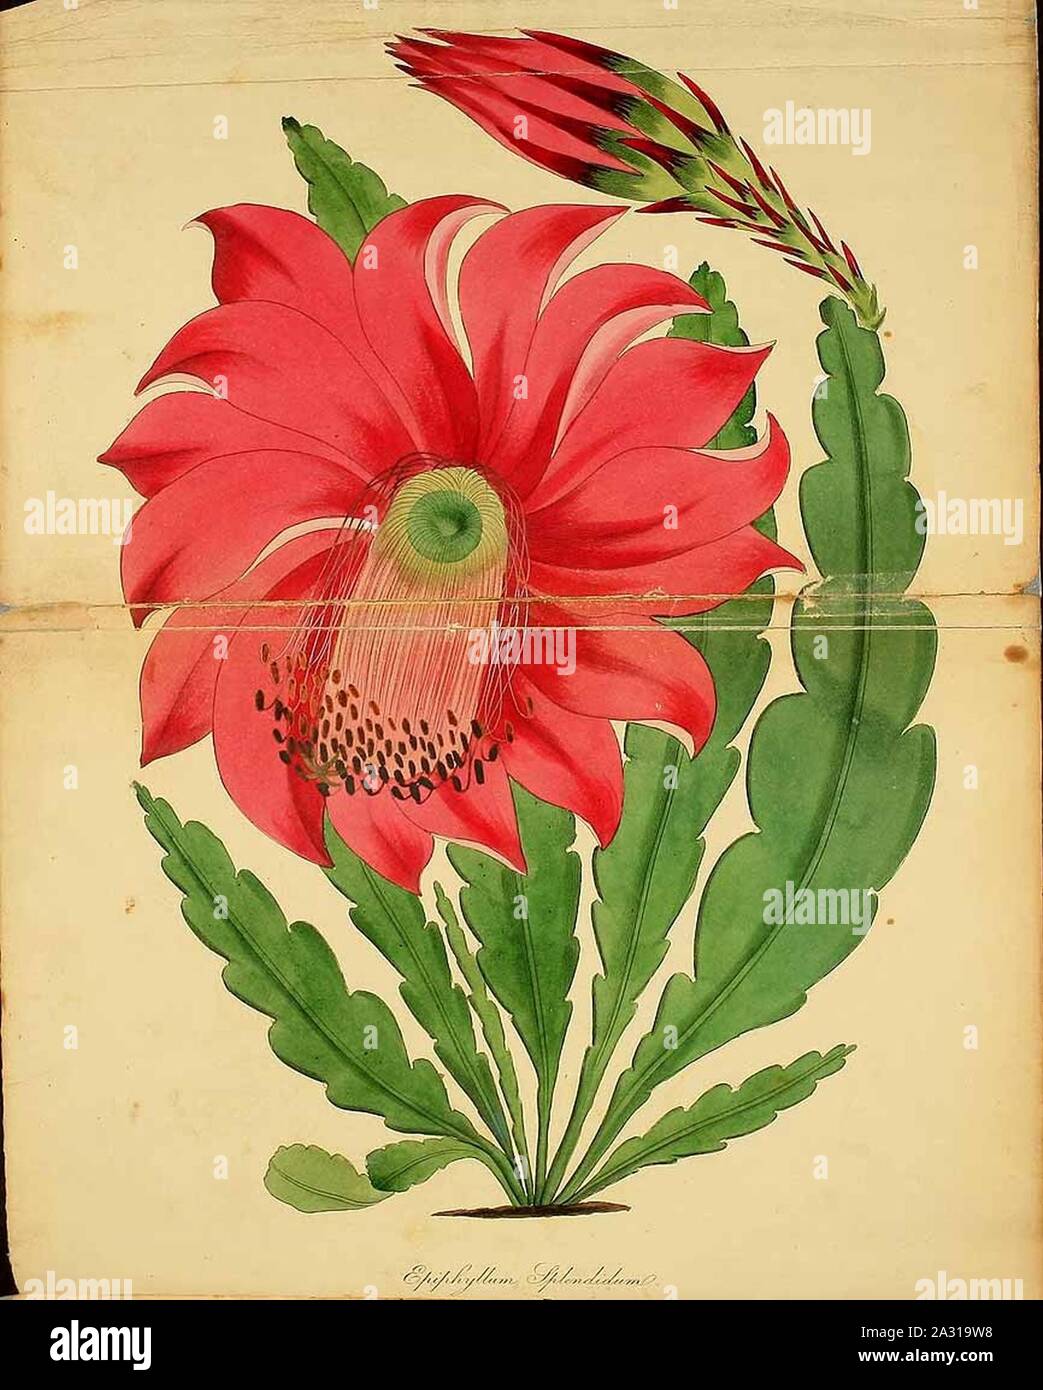 Epiphyllum splendidum 188820. Stock Photo